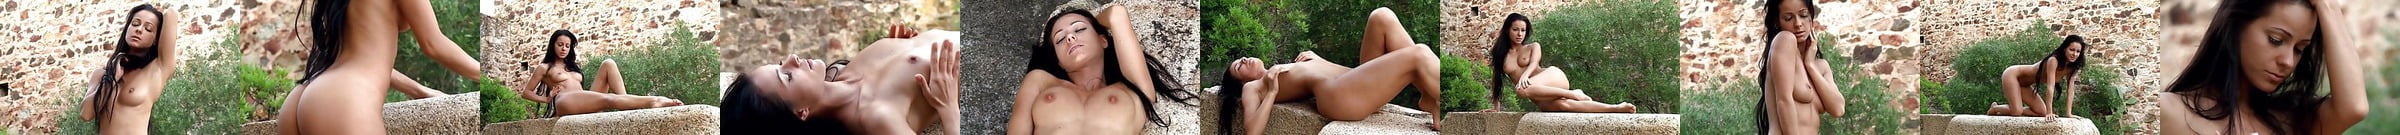 Melisa Mendiny Free Porn Star Videos 46 Xhamster